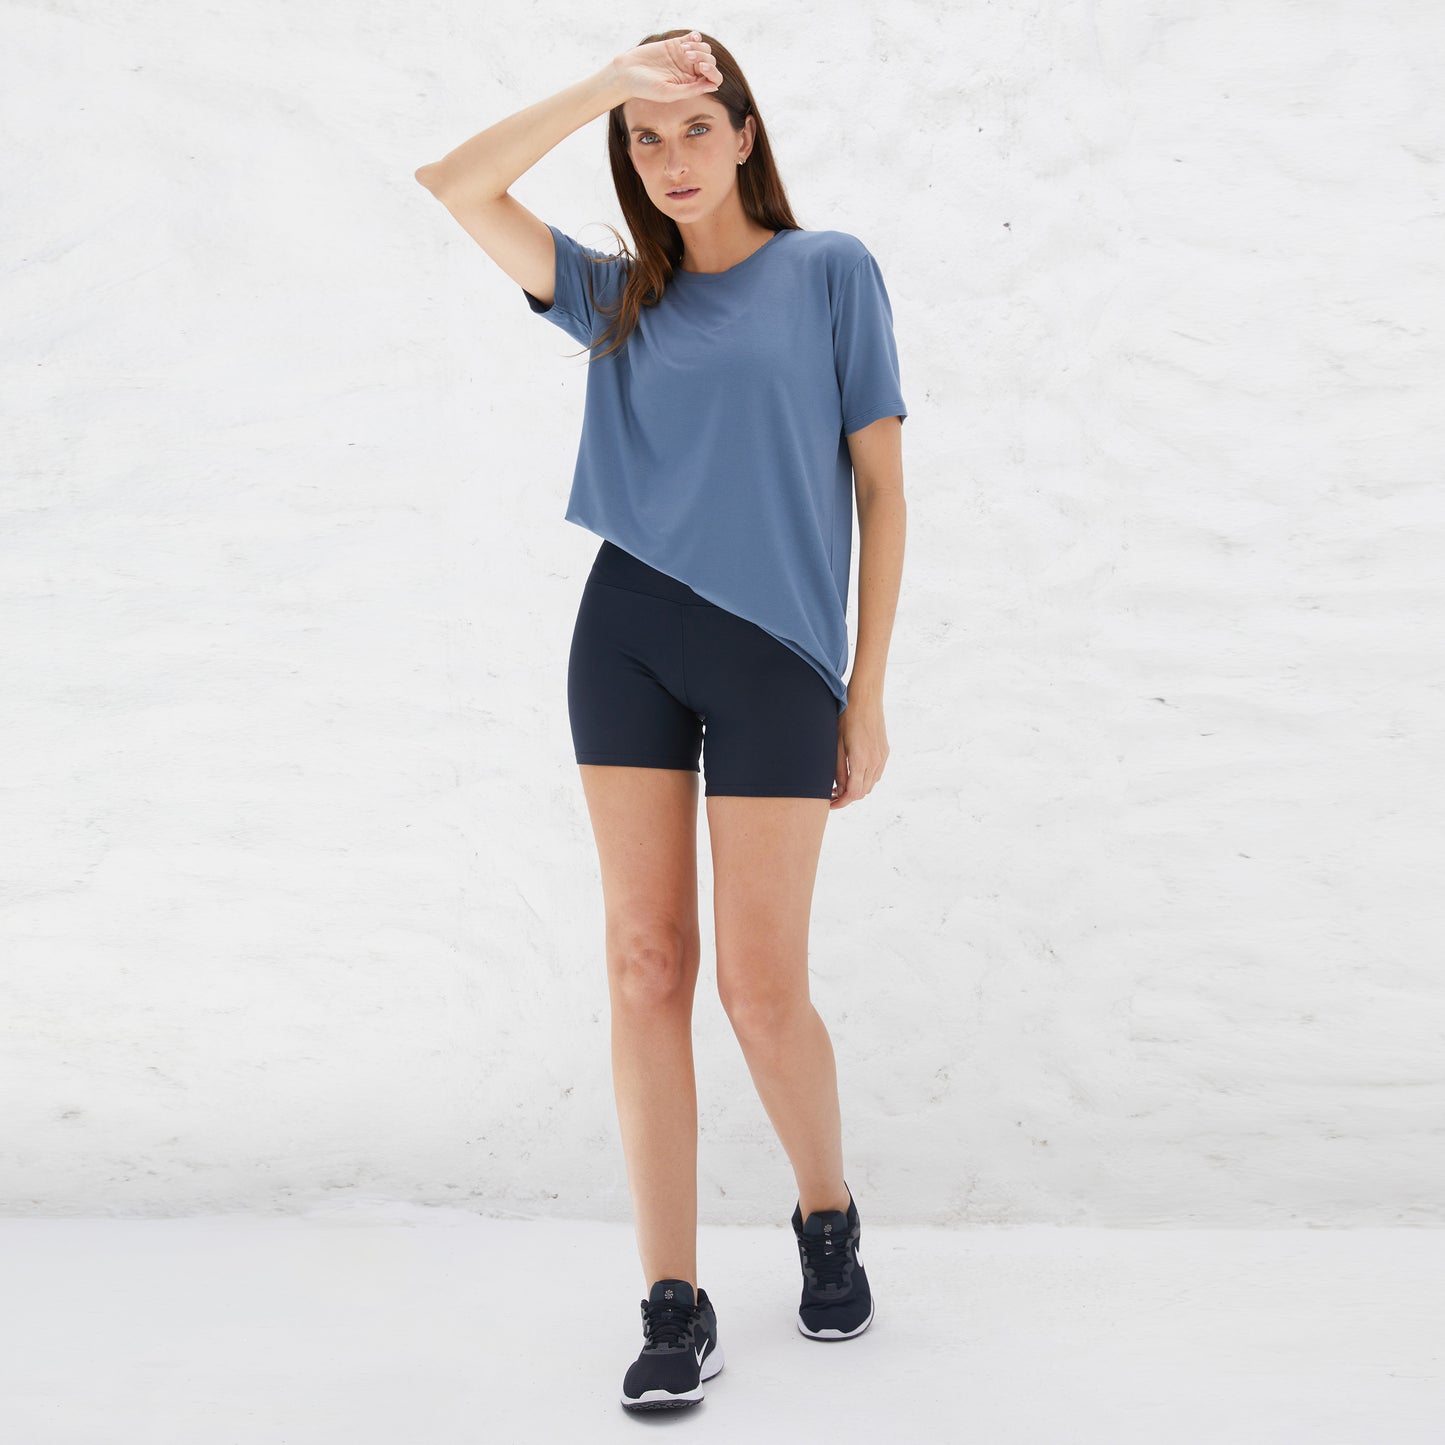 Camiseta Modal Masculina | Travel T-Shirt - Azul Cobalto